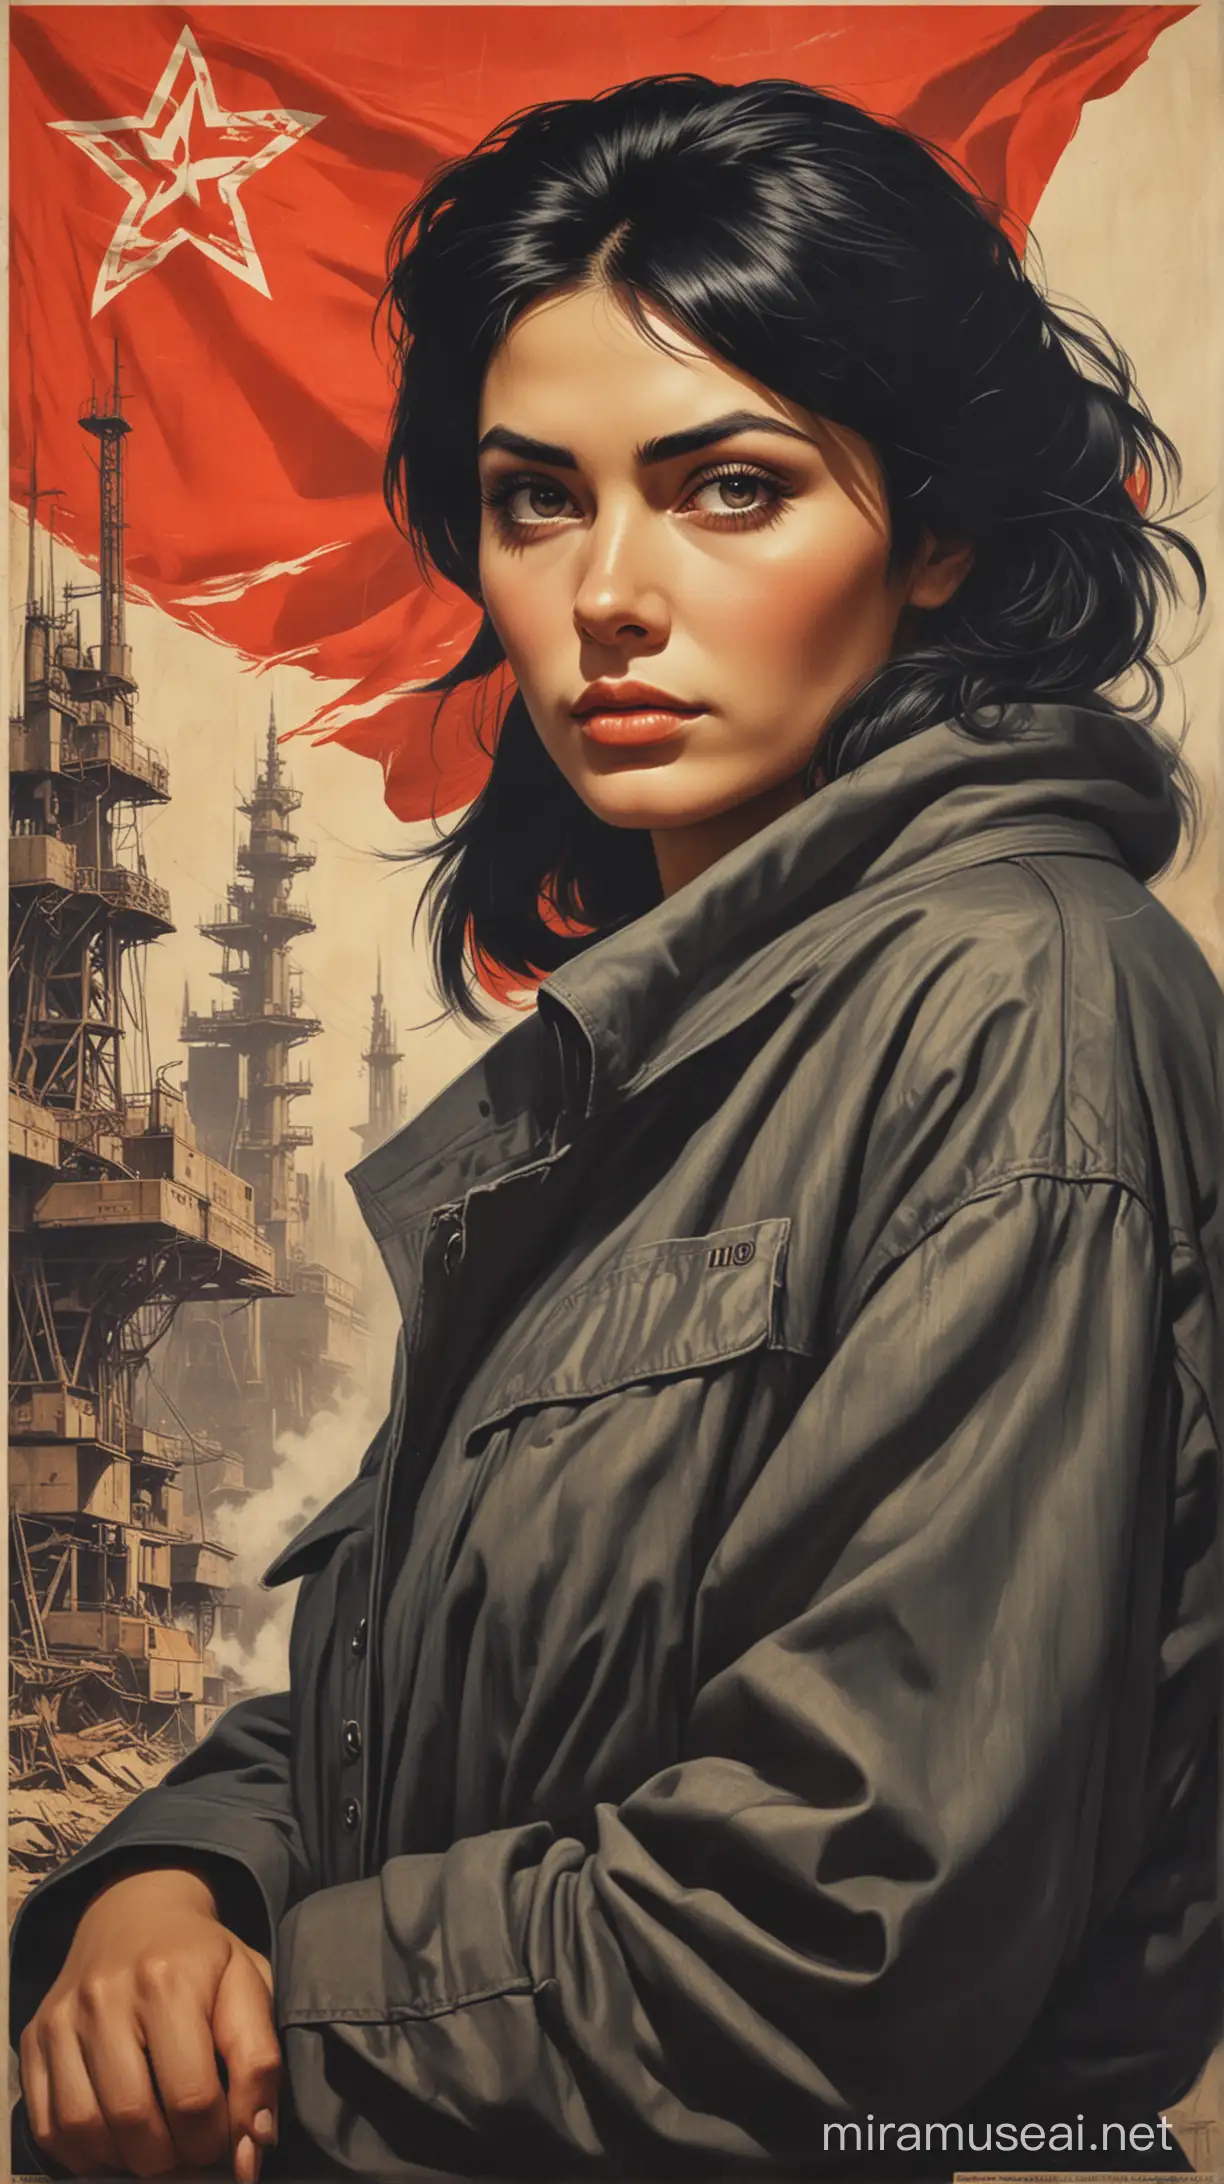 Soviet Retro Poster Portrait of Working Class Woman Seeking Hope and Freedom in HiTech Cyberpunk Setting